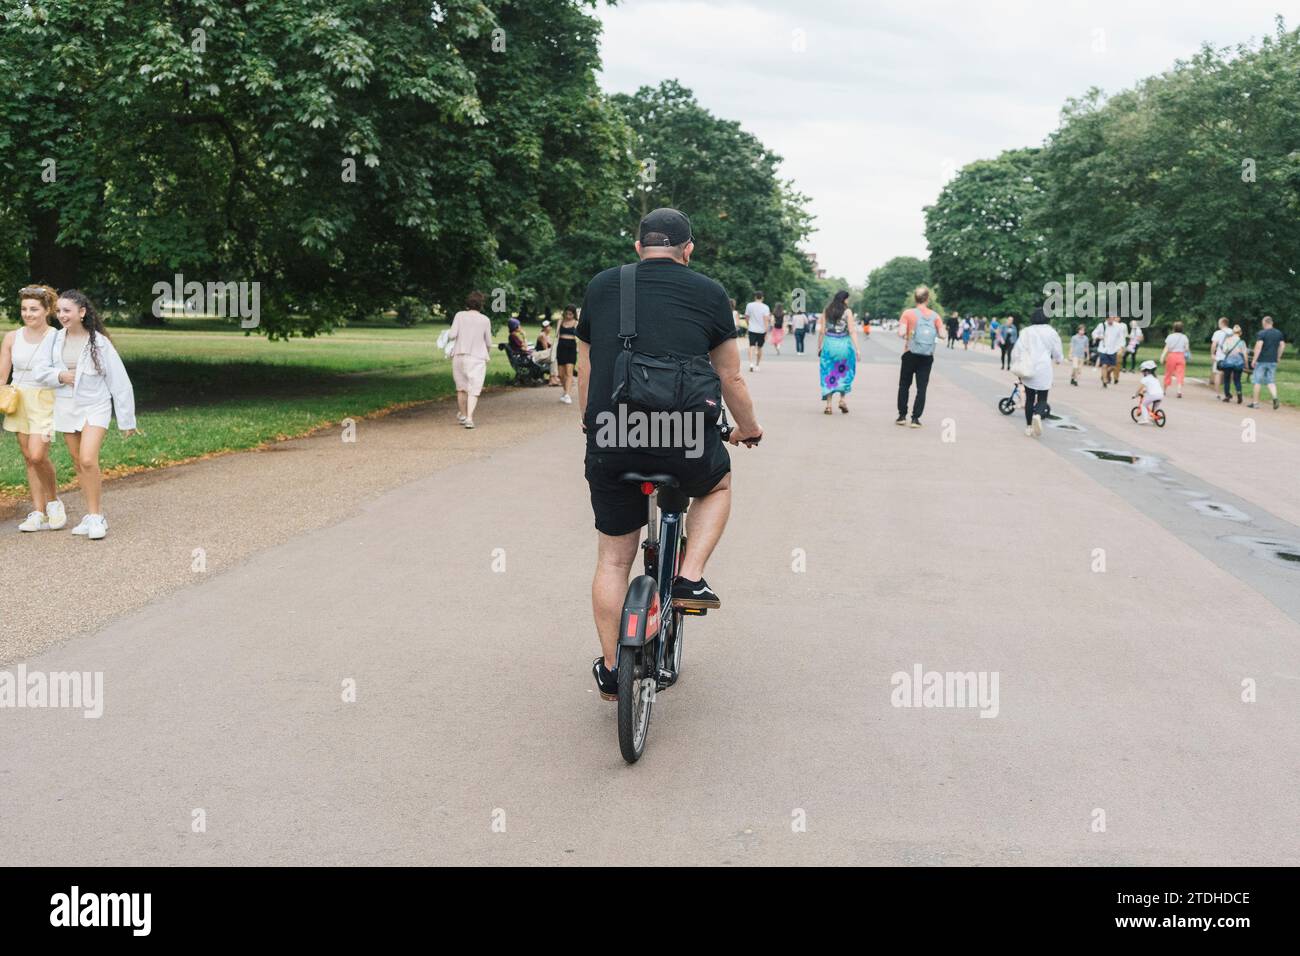 A man rides a hire / rental Santander eBike in London through a park Stock Photo